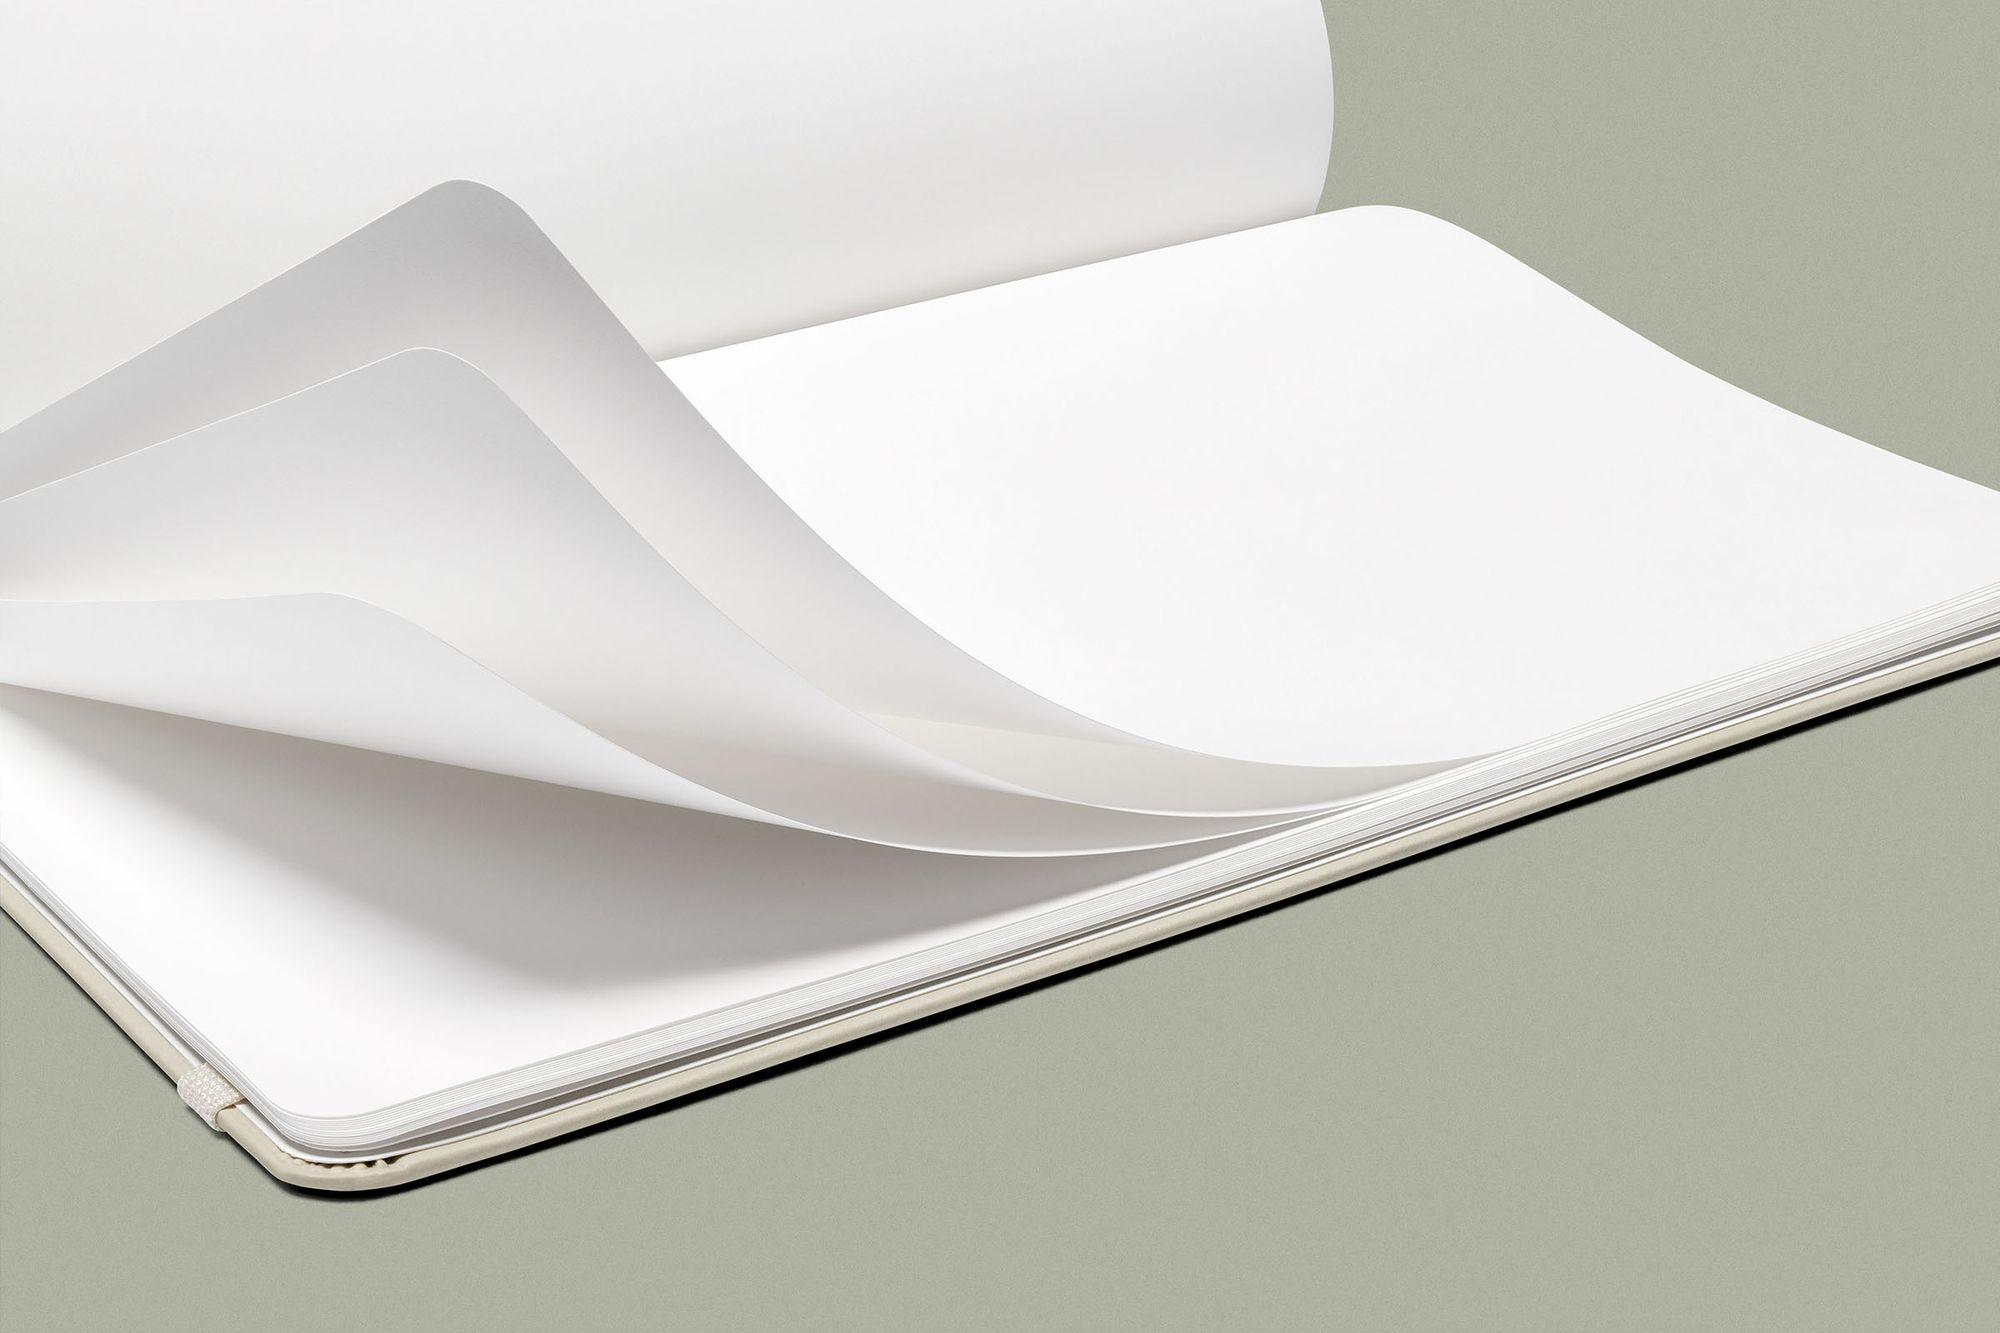 Karst Stone Paper vs. Traditional Paper